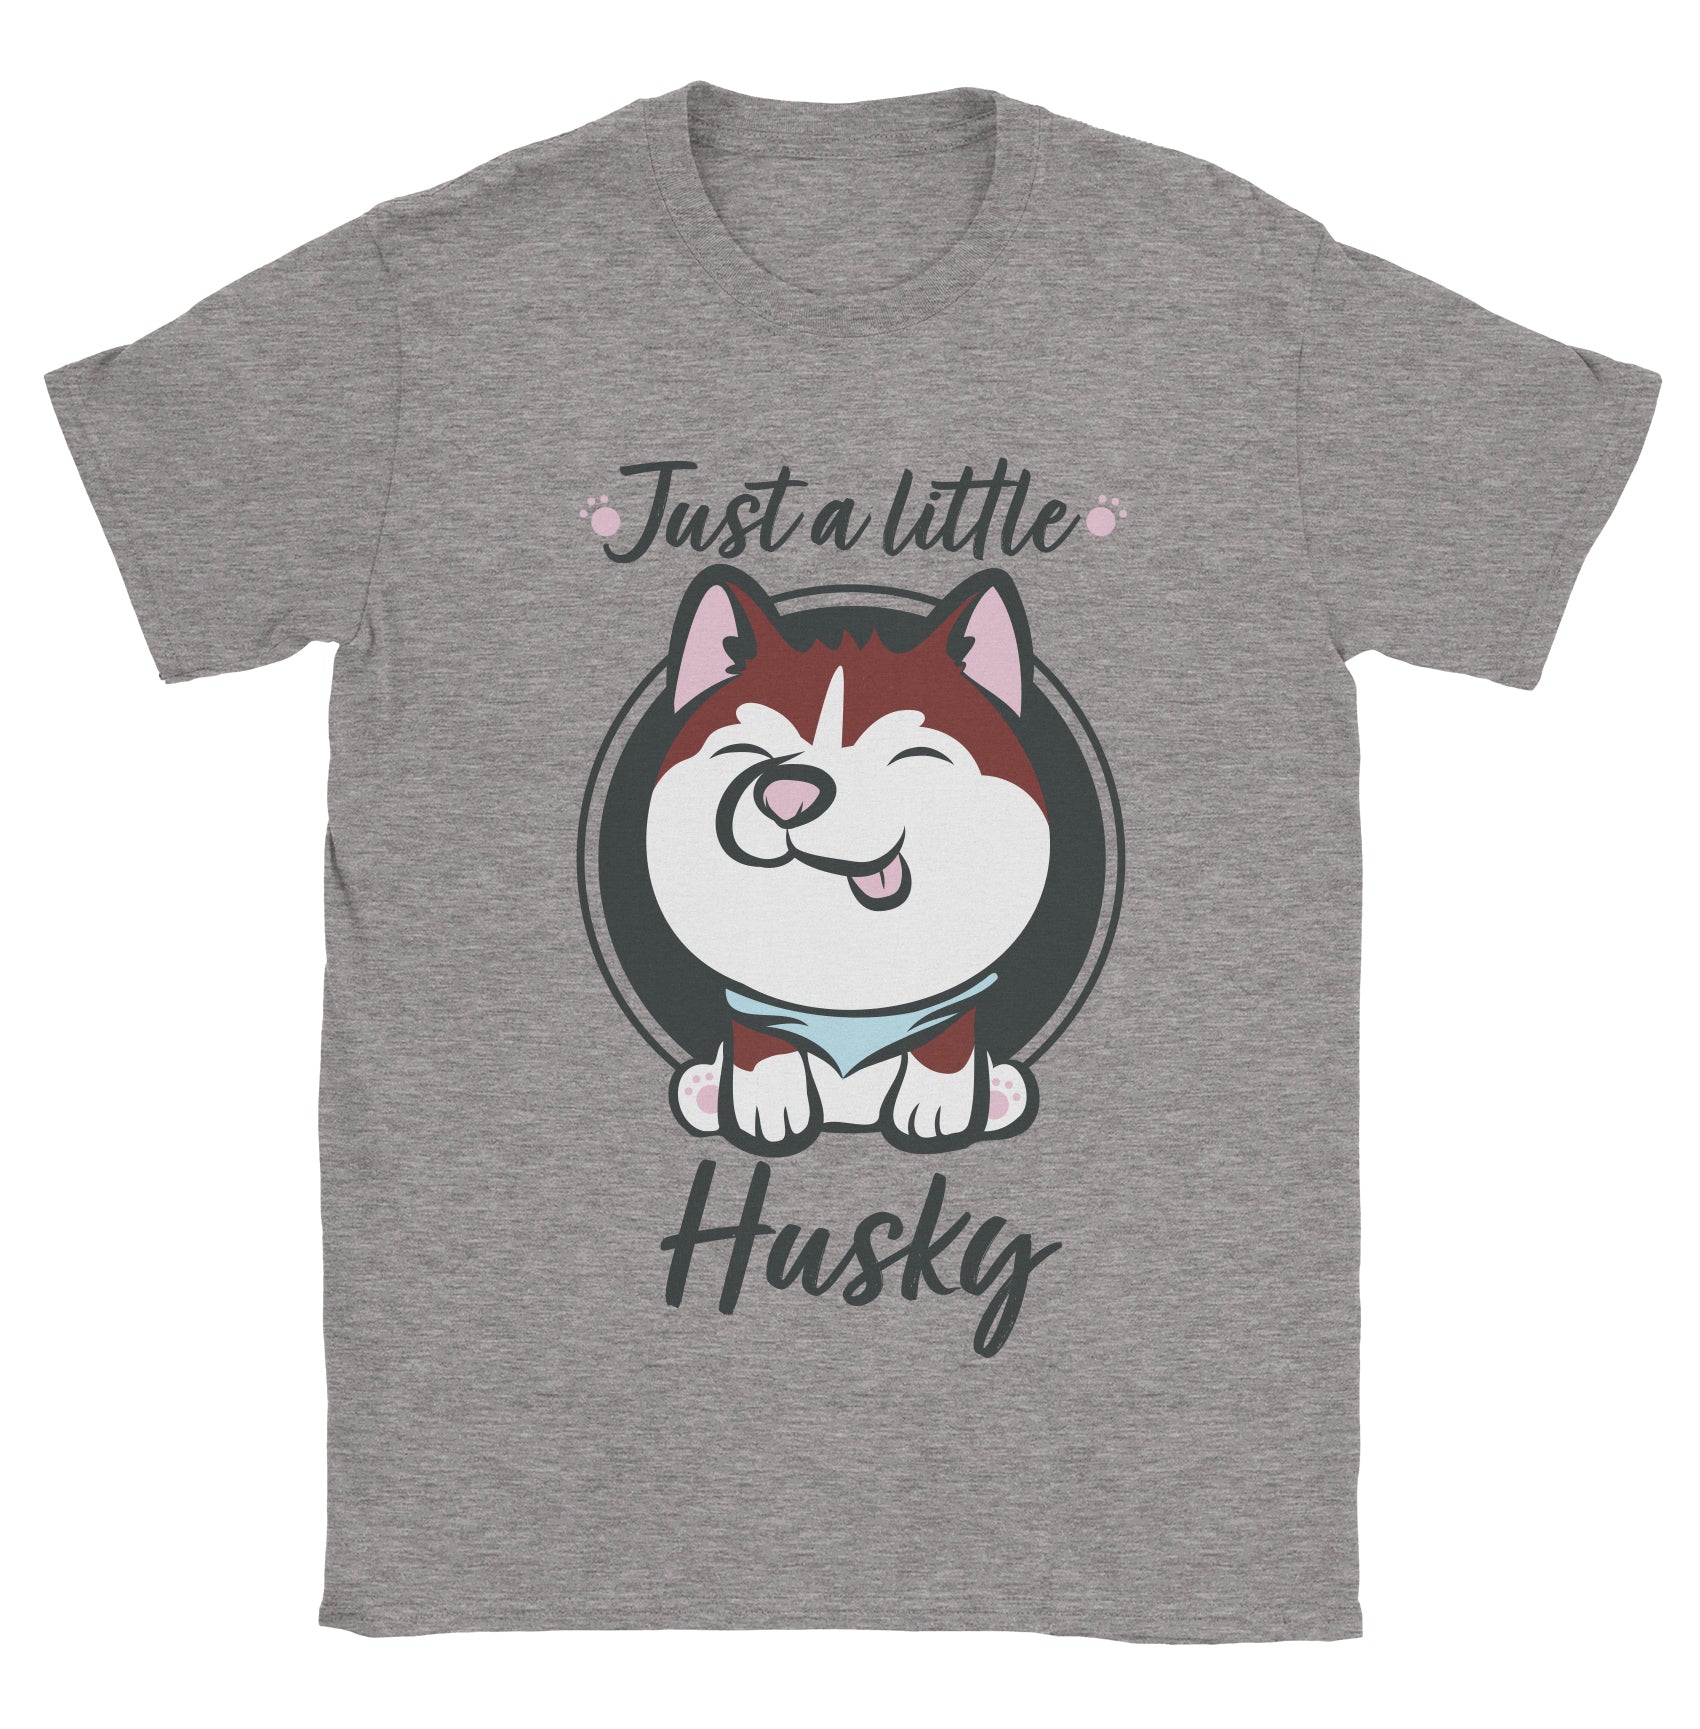 Just a little Husky - Black Cat MFG -